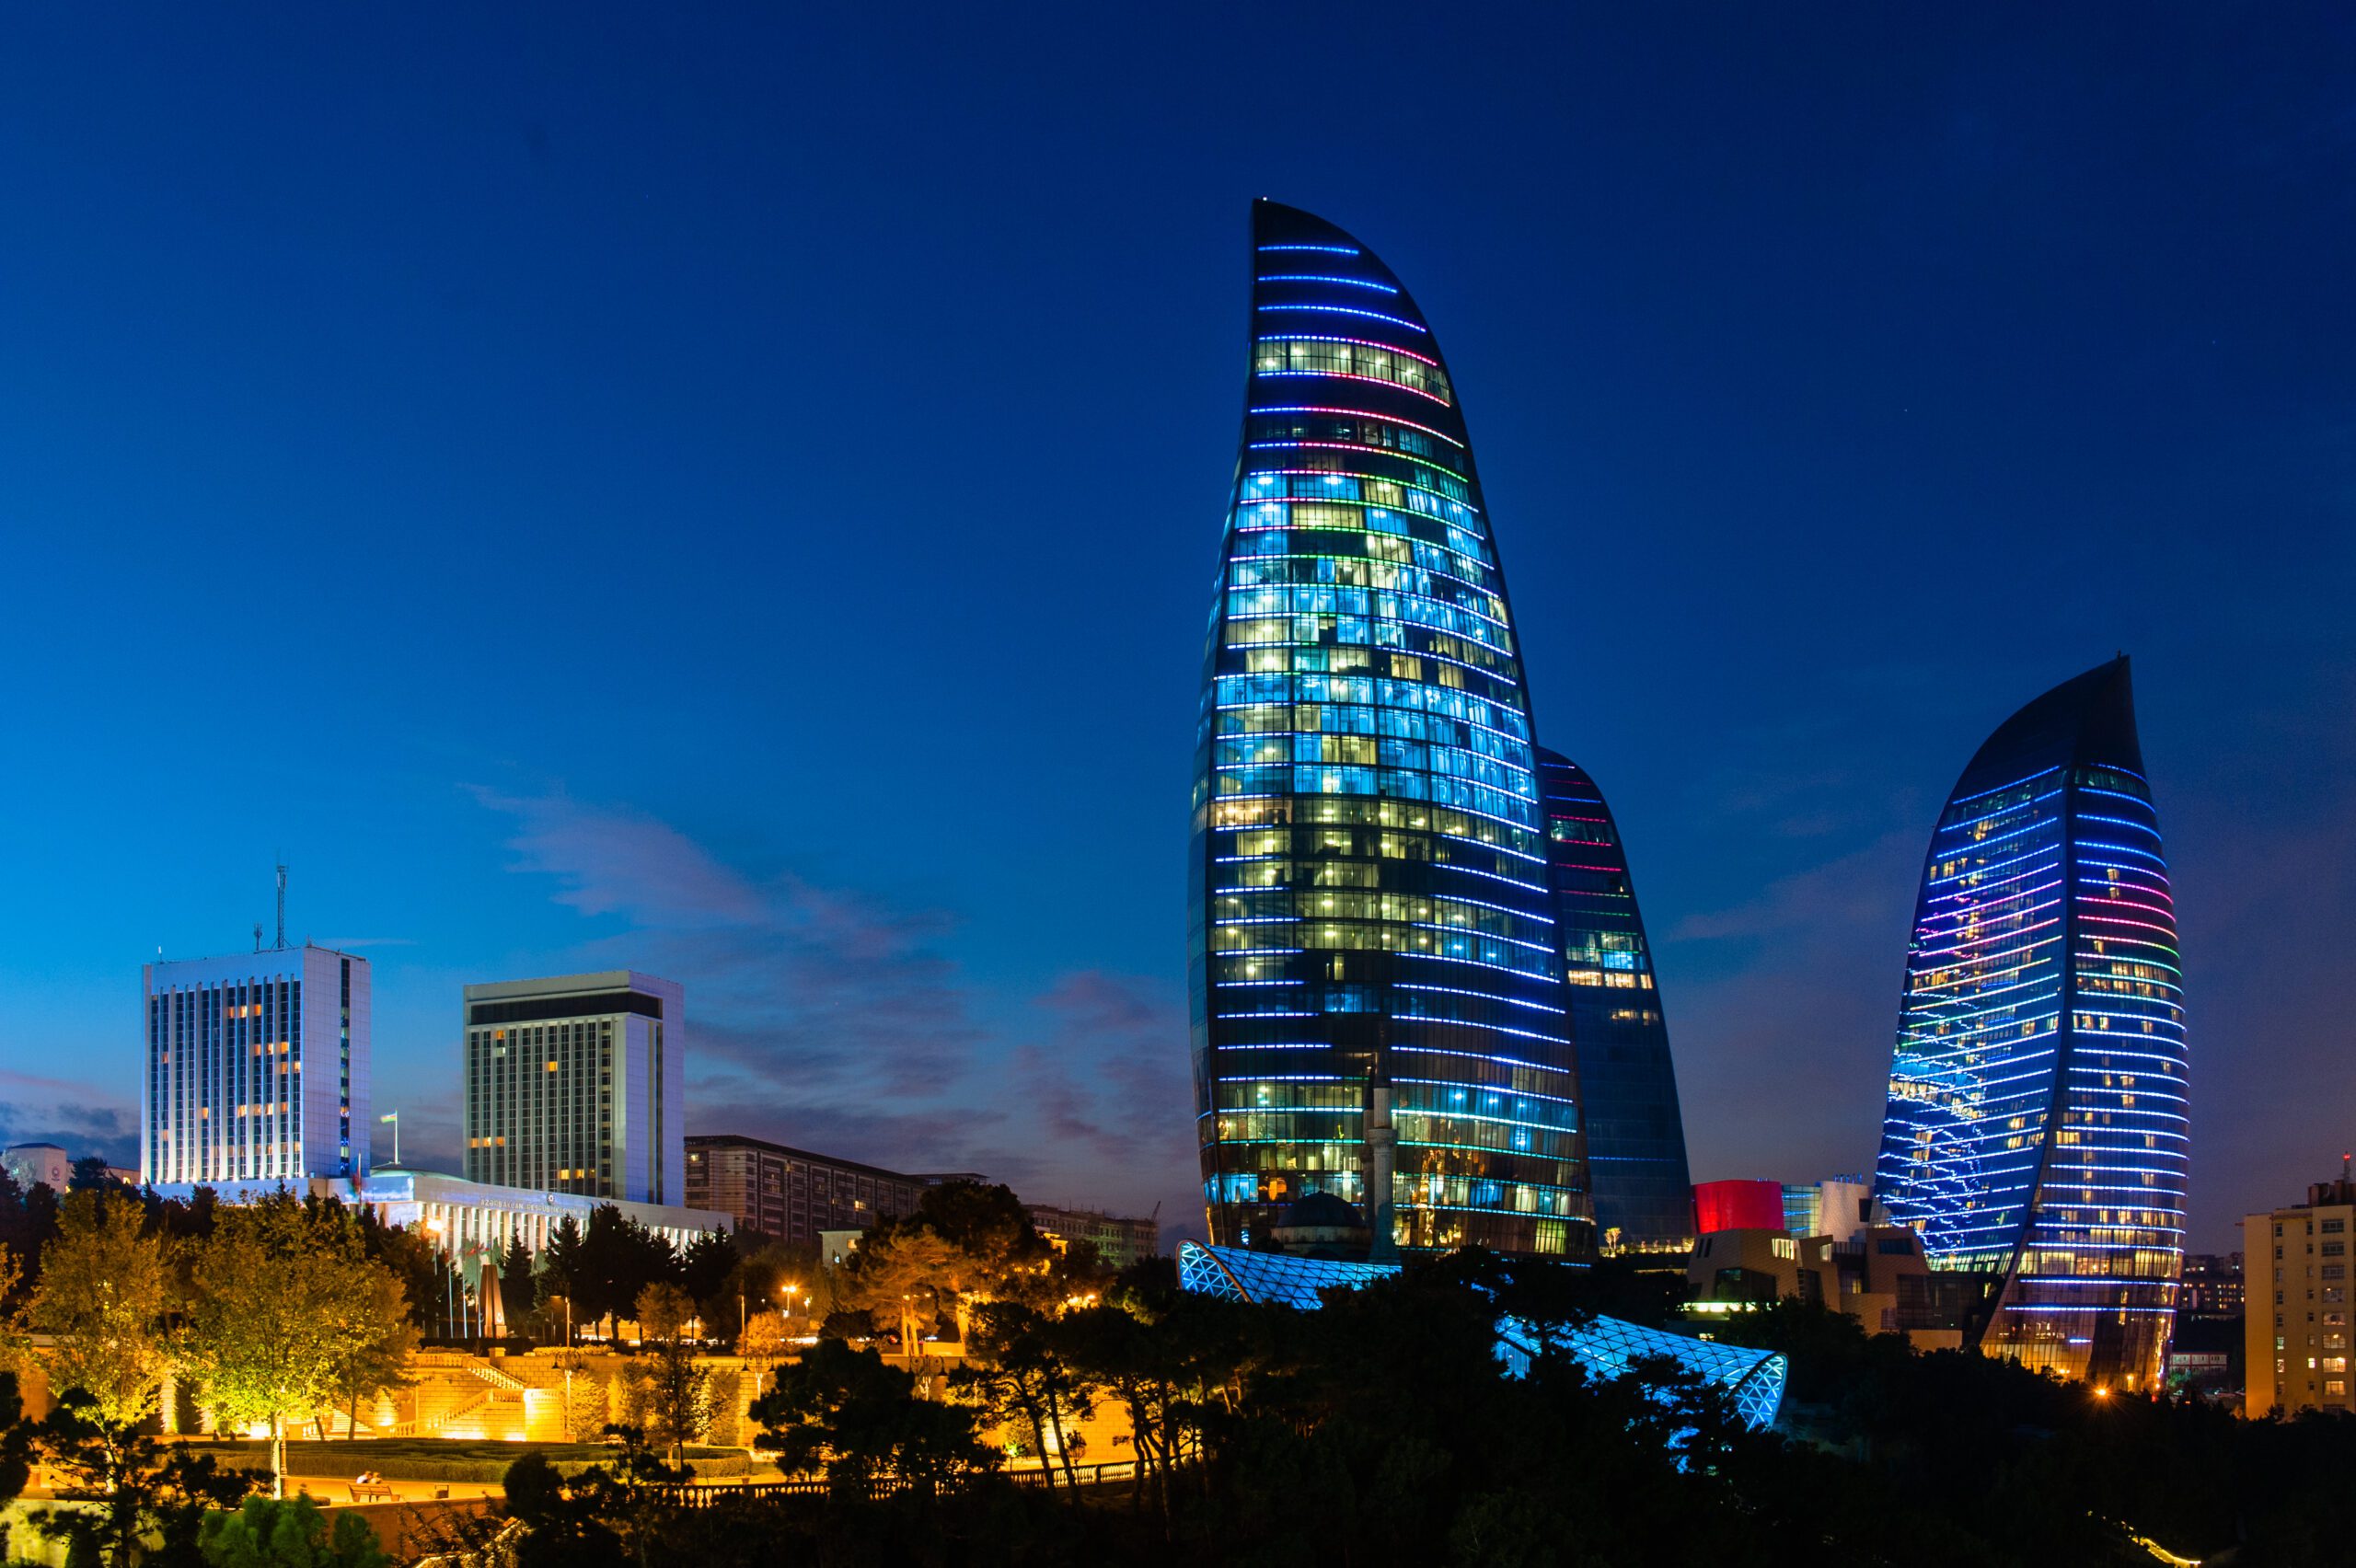 Flame Towers are new skyscrapers in Baku, Azerbaijan